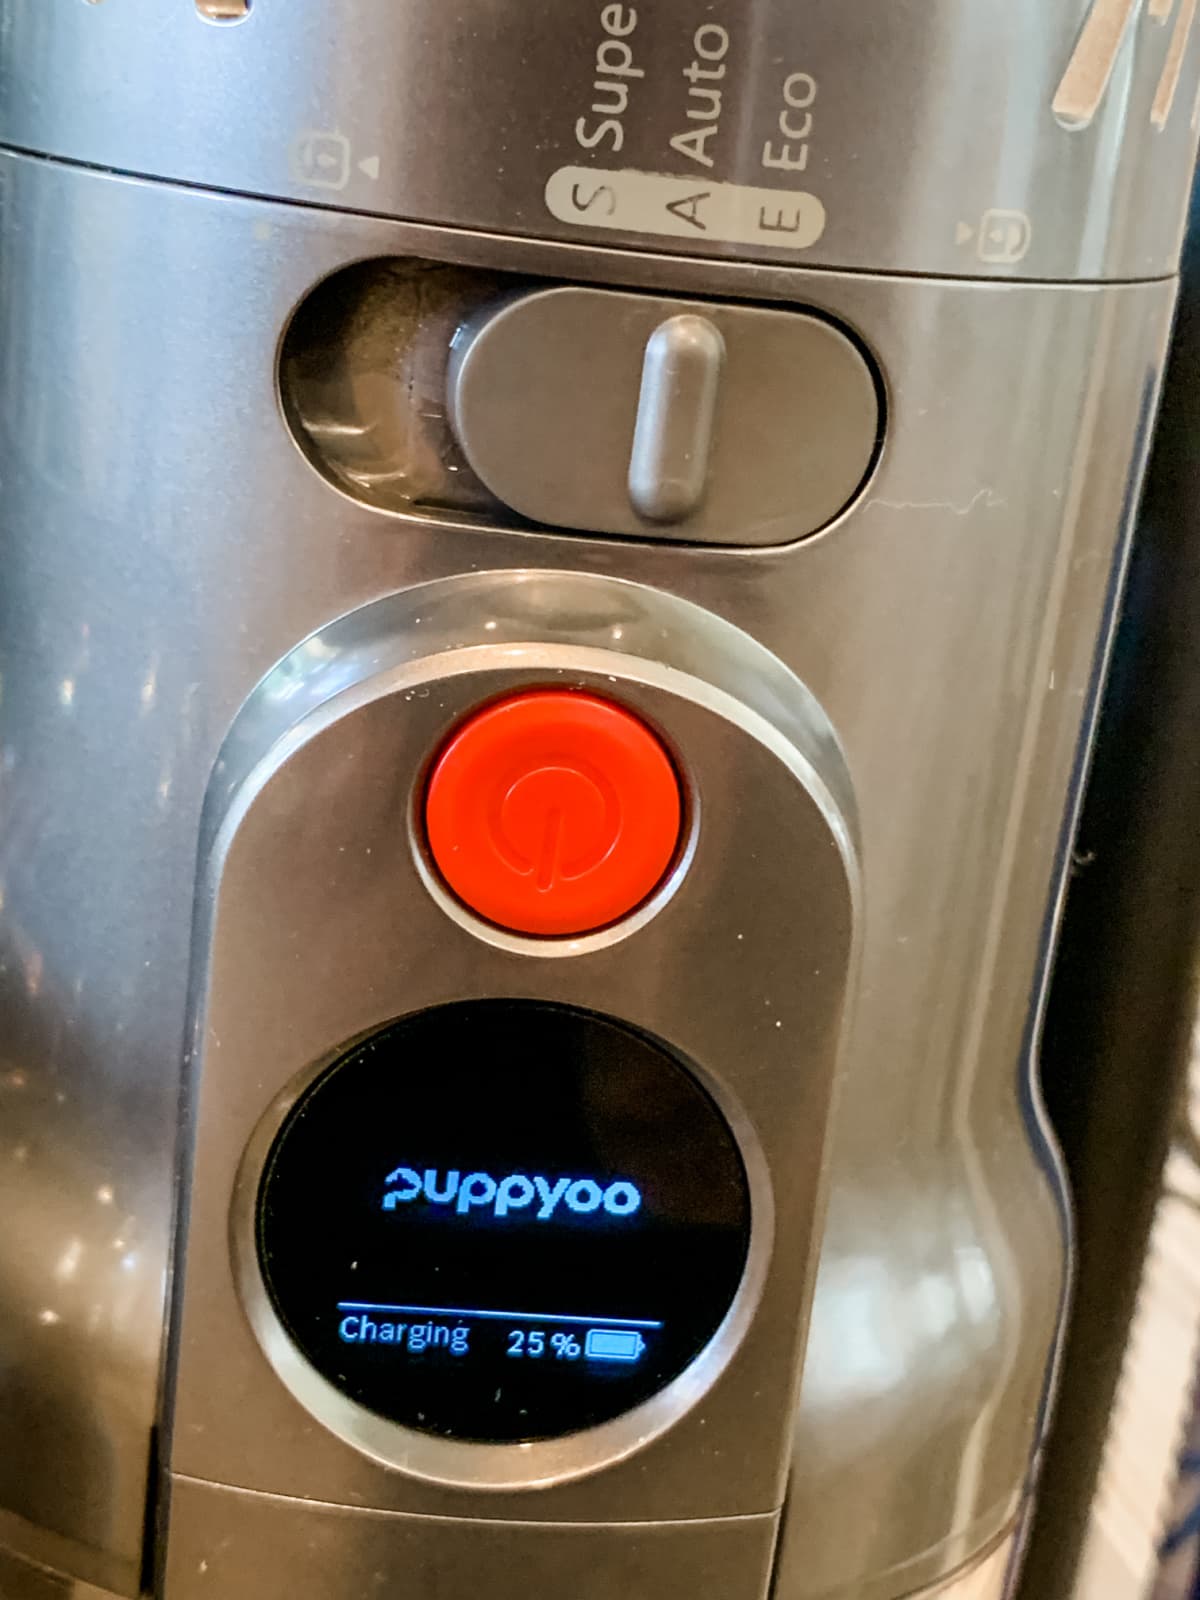 Puppyoo T12 Plus Rinse Vacuum & Mop 2-in-1 Review 